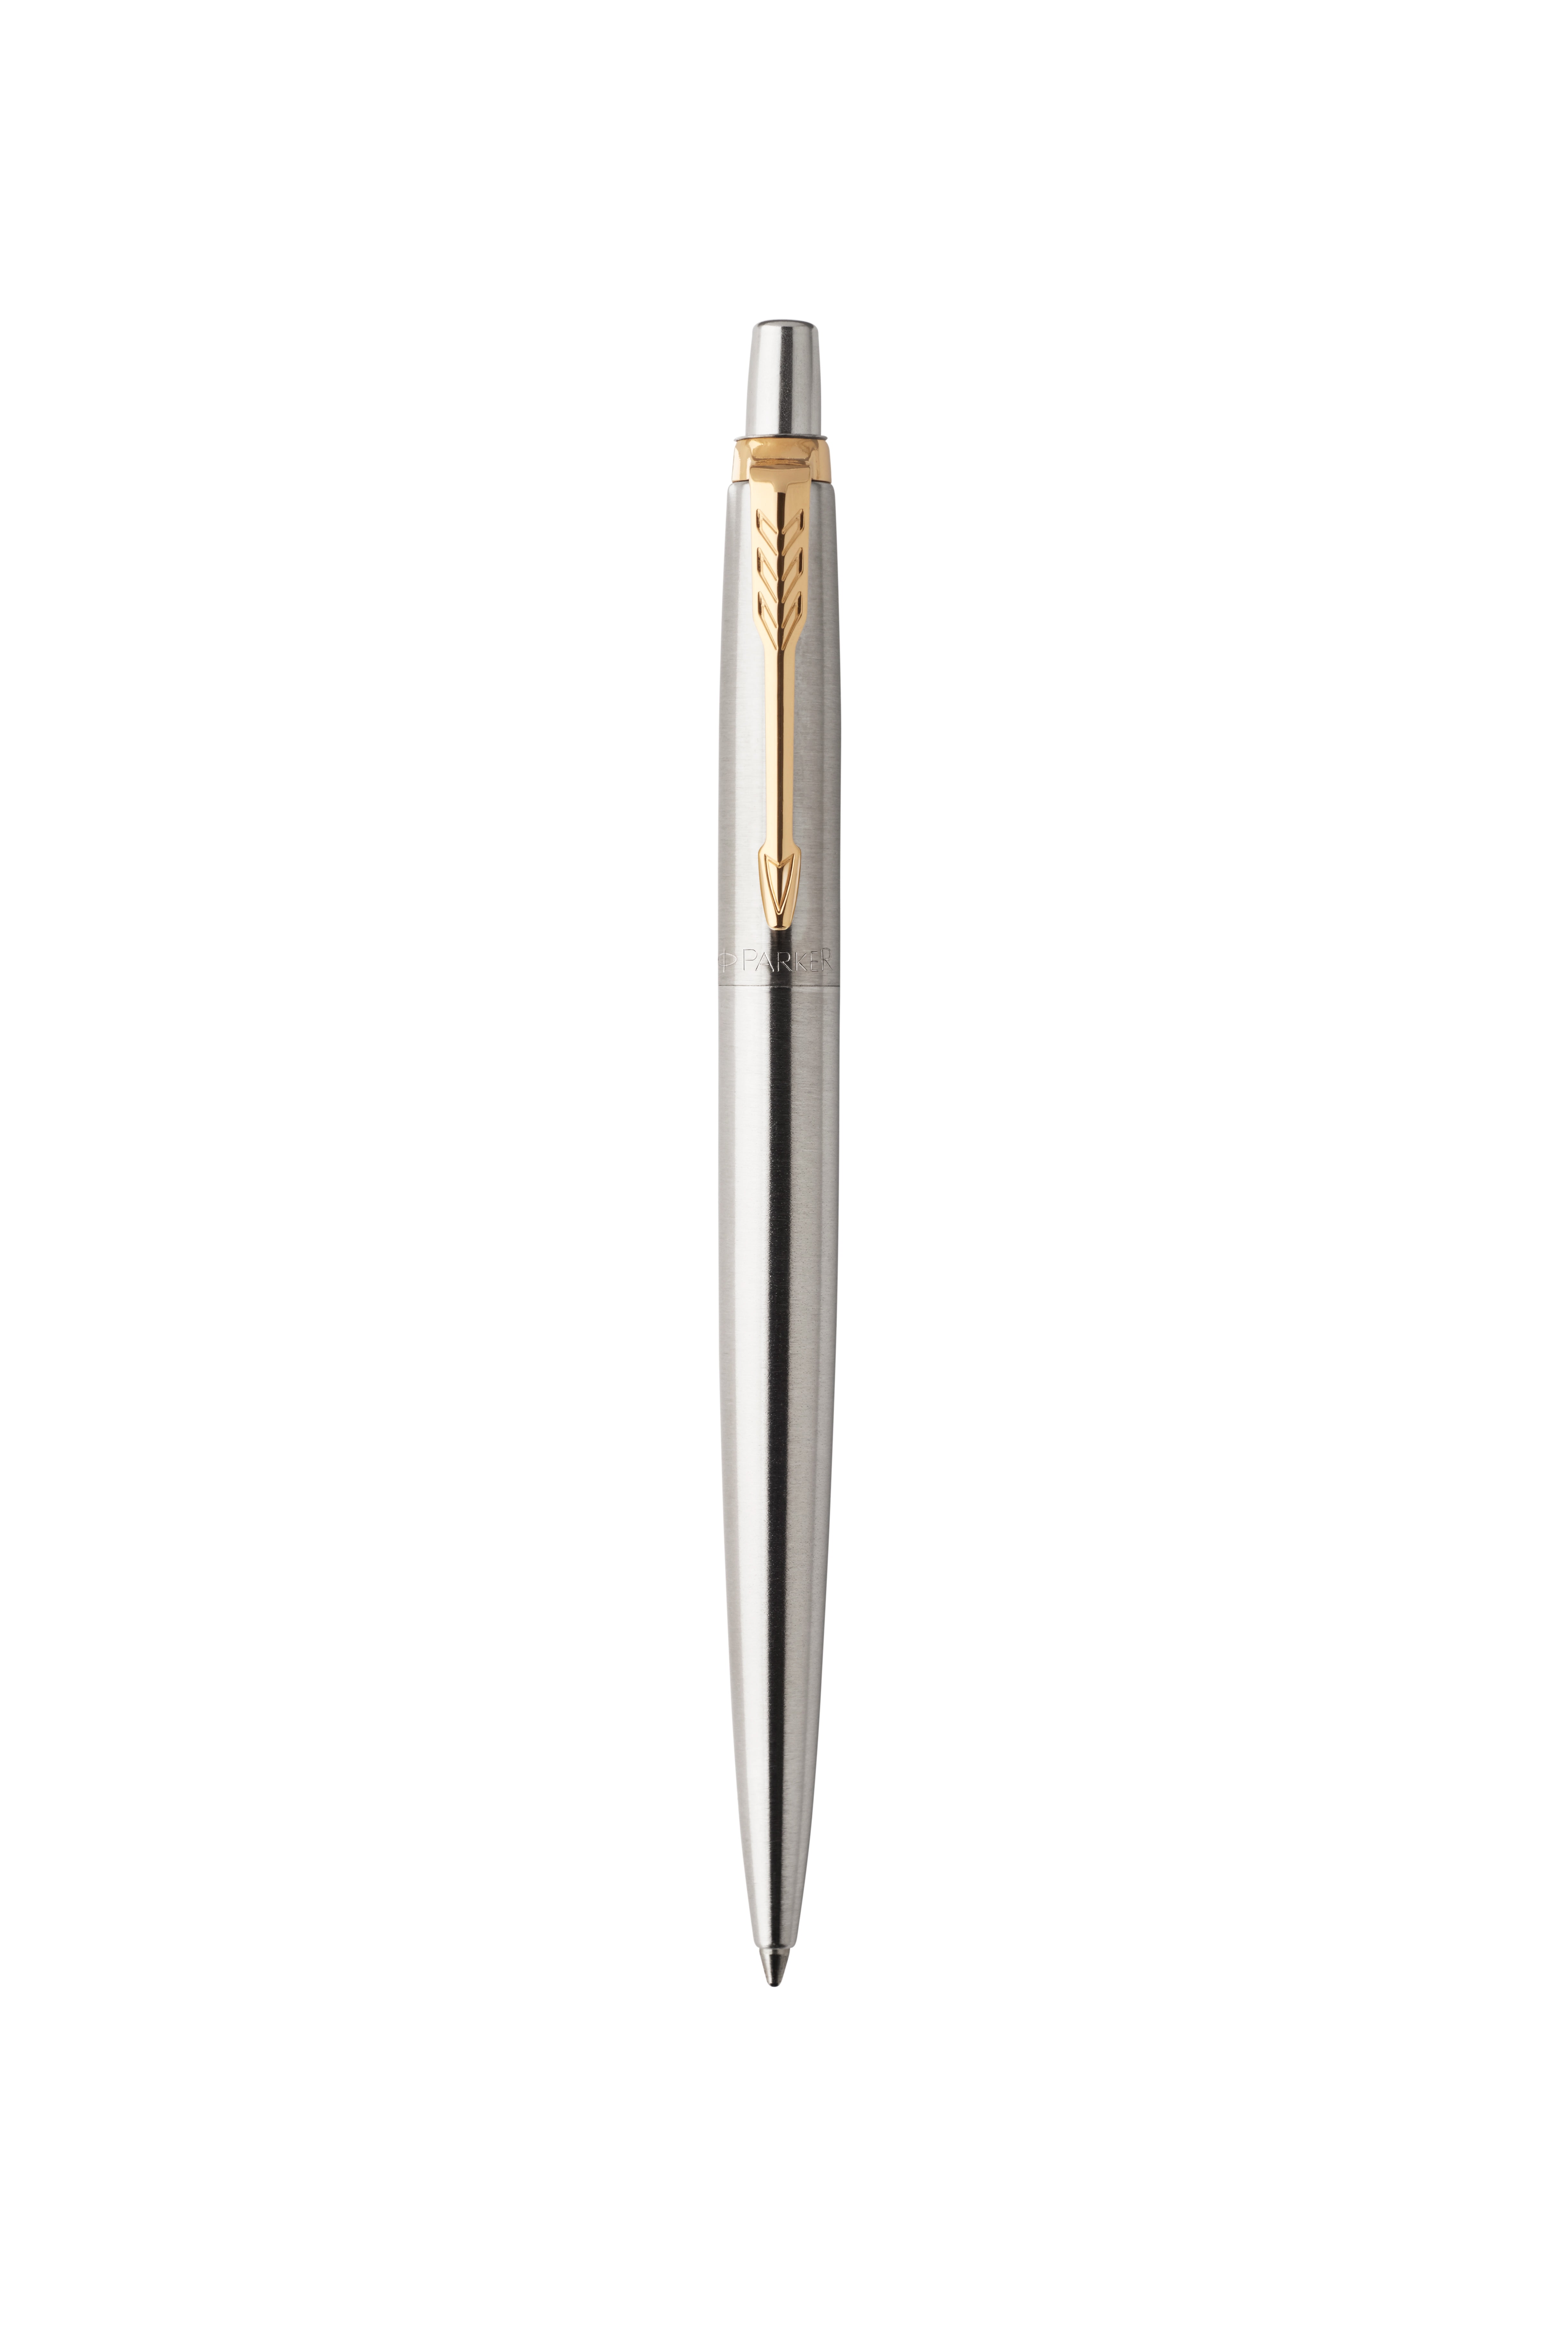 Juvale 12 Pack Gold Ballpoint Pens for Wedding Guest Book, Bulk Office  Supplies, Black Ink, 1mm Medium Point (Metallic, 6.4 In) 